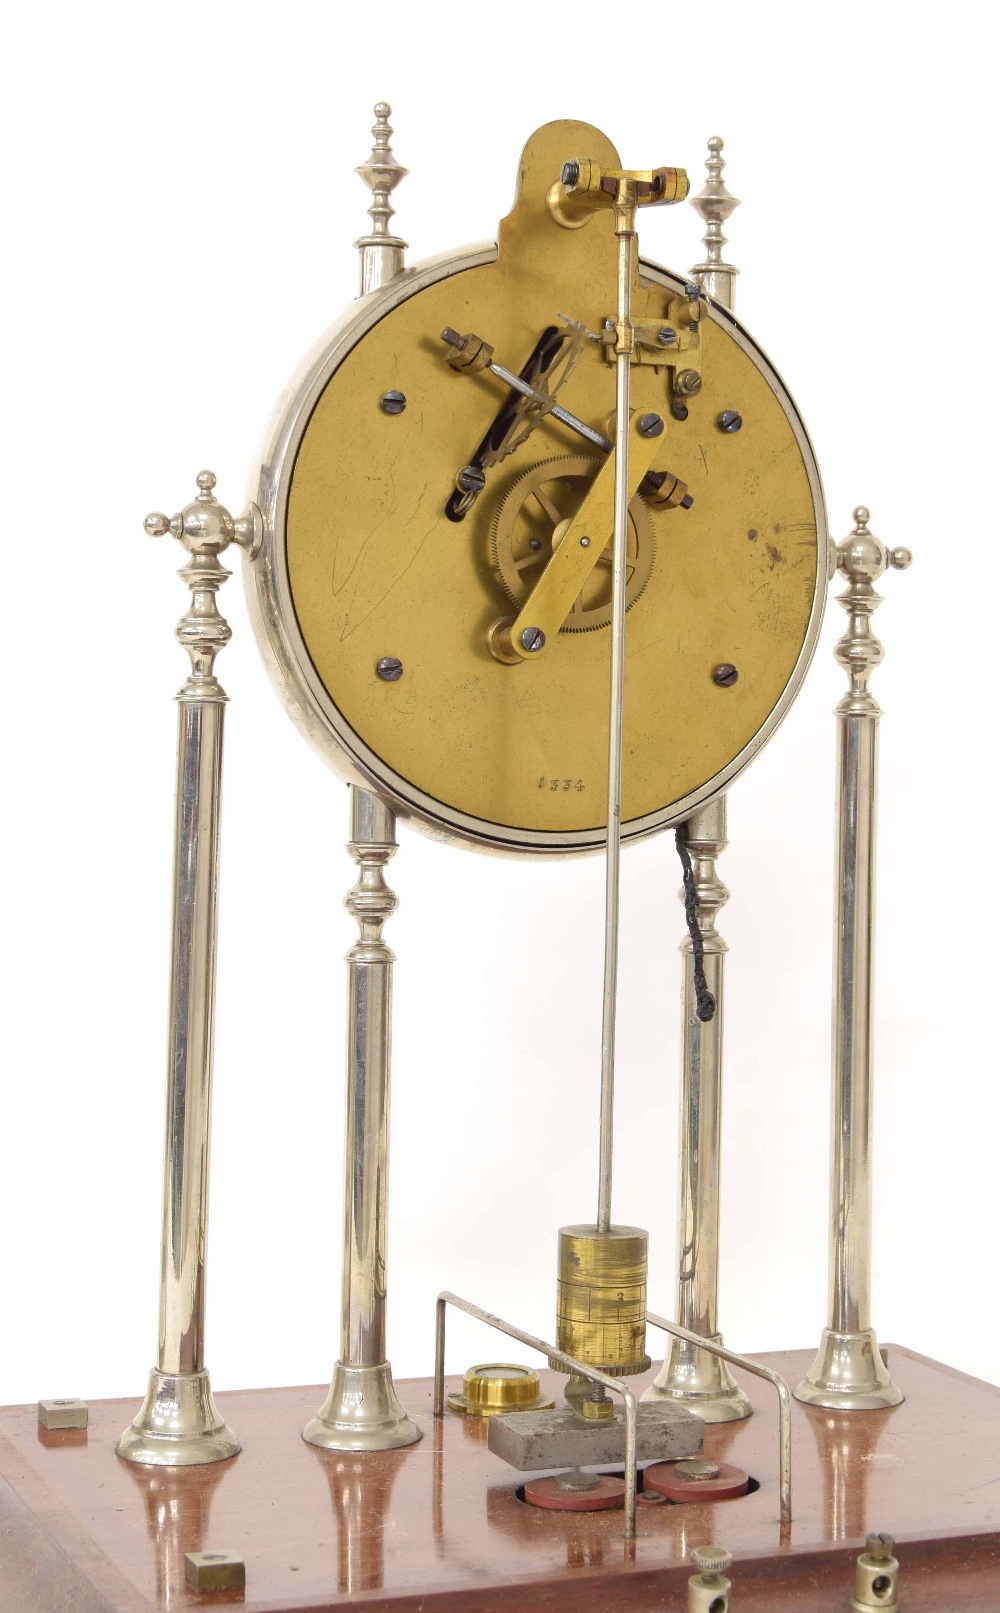 London Stereoscopic Co electric mantel clock, the 4.75" white dial signed London Stereoscopic Co, - Image 2 of 2